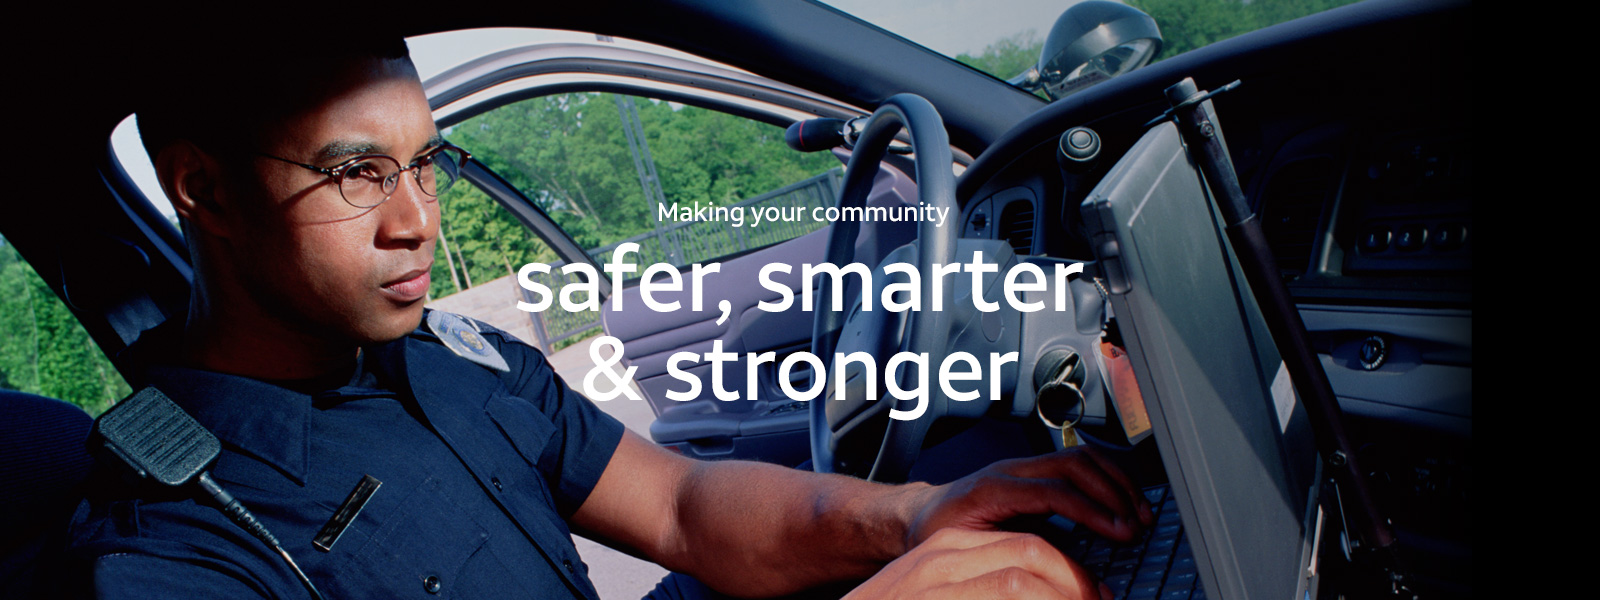 Making your community safer, smarter & stronger